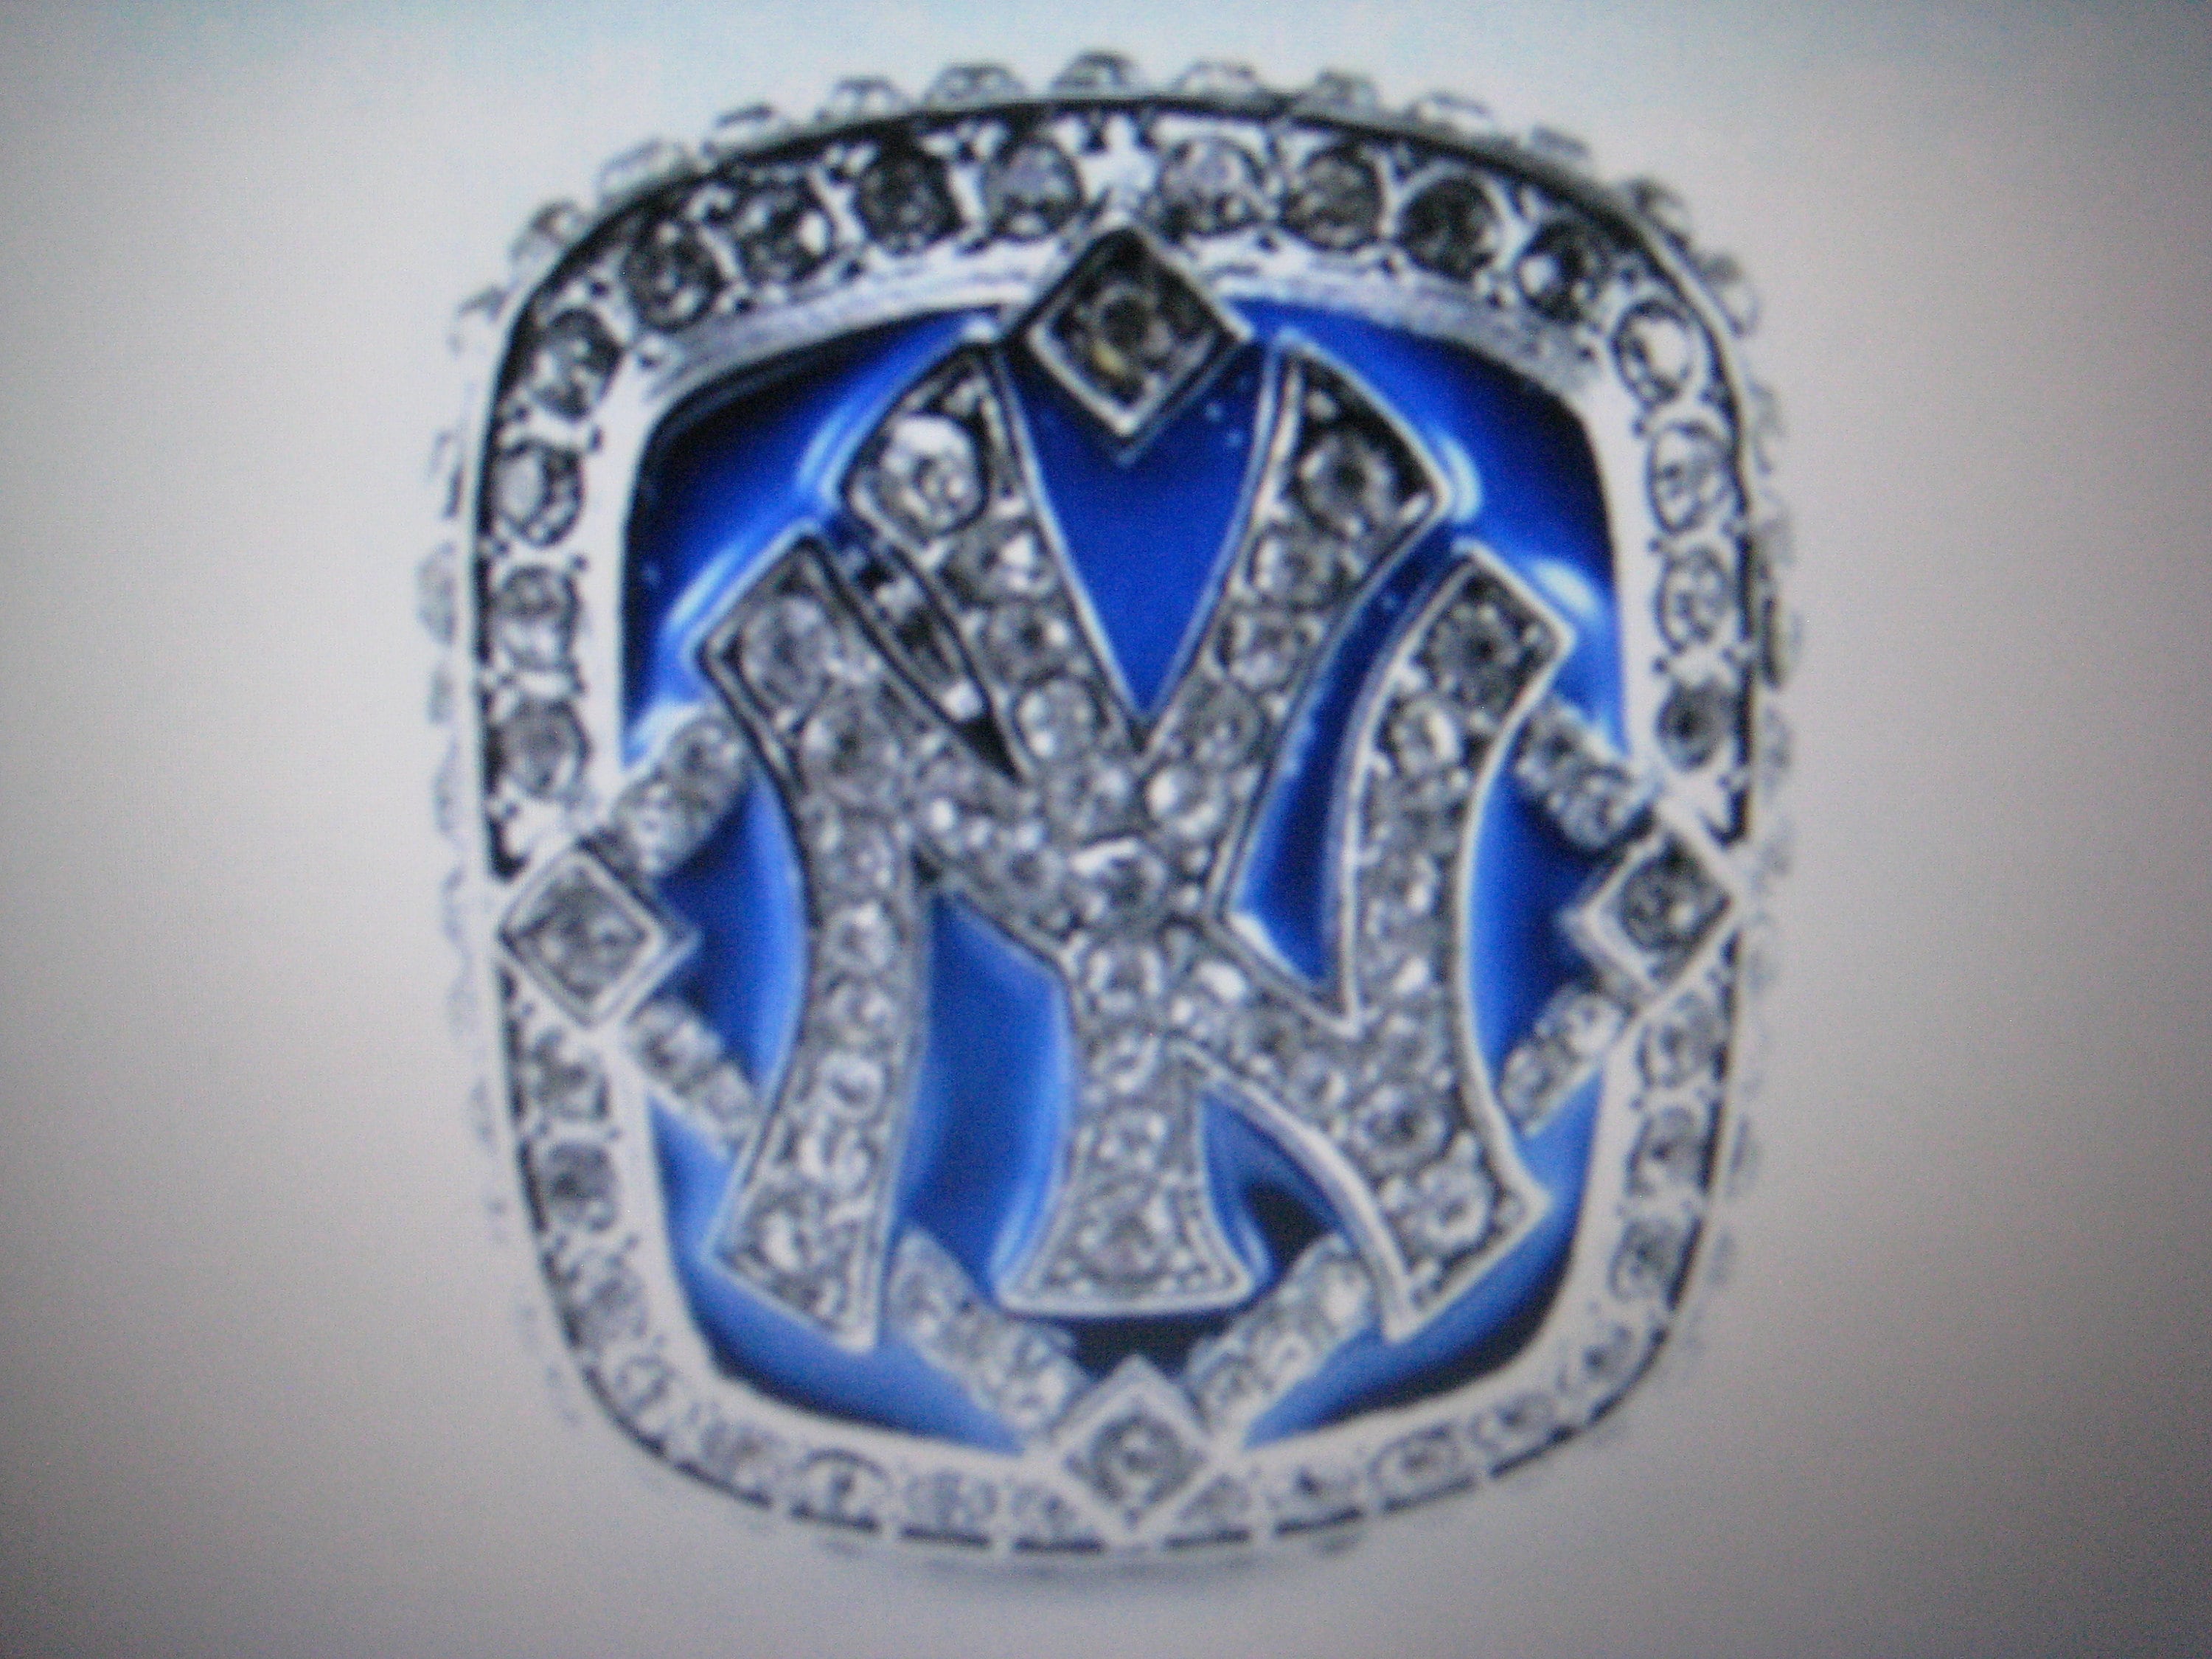 2009 New York Yankees World Series Championship Ring - www